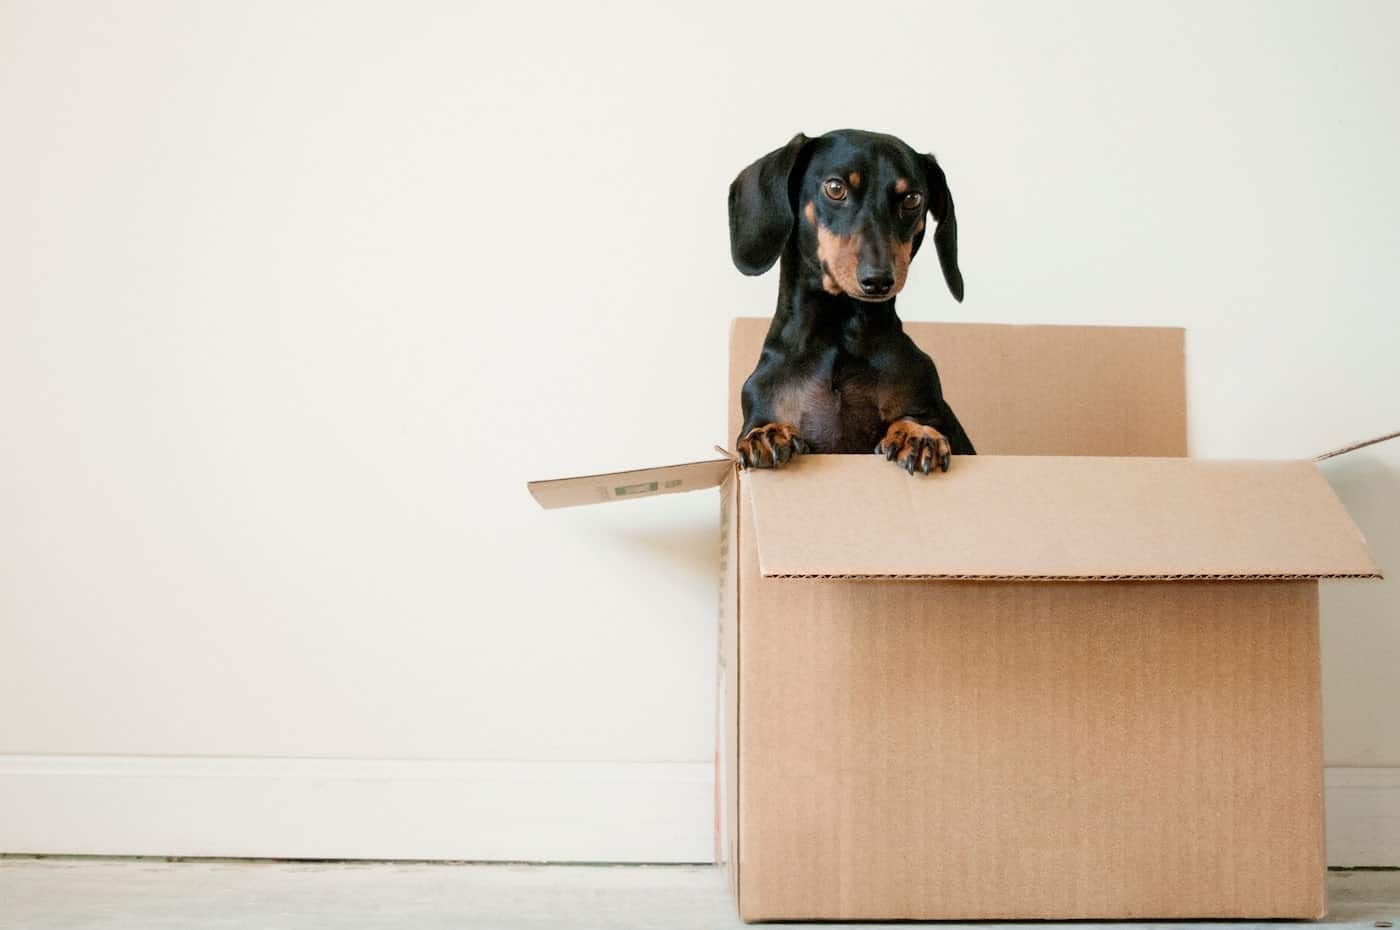 Dog inside a cardboard box